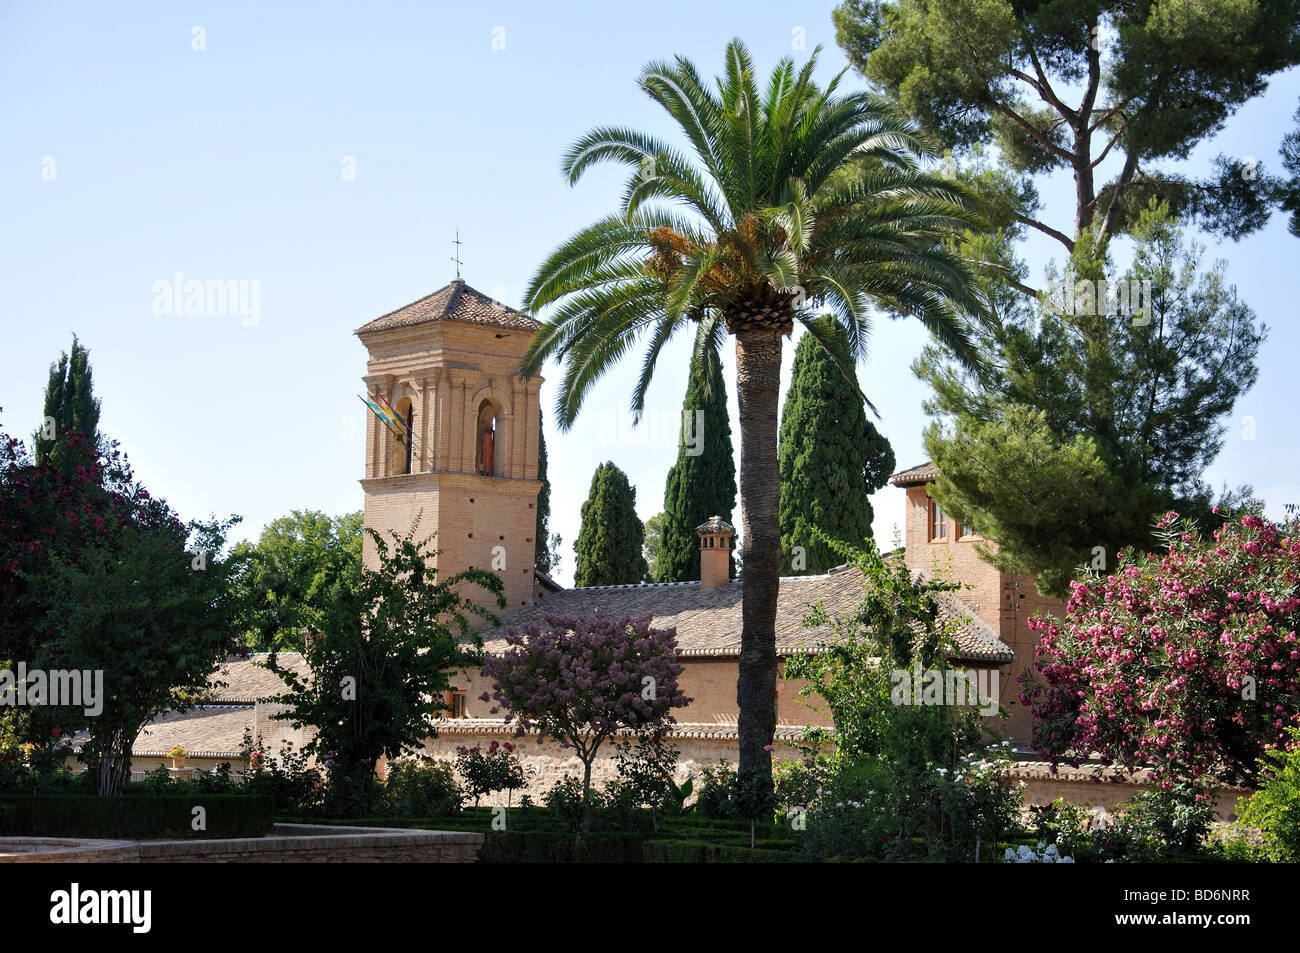 Palacio de Carlos V and Gardens, La Alhambra, Granada, Granada Province, Andalusia, Spain Stock Photo